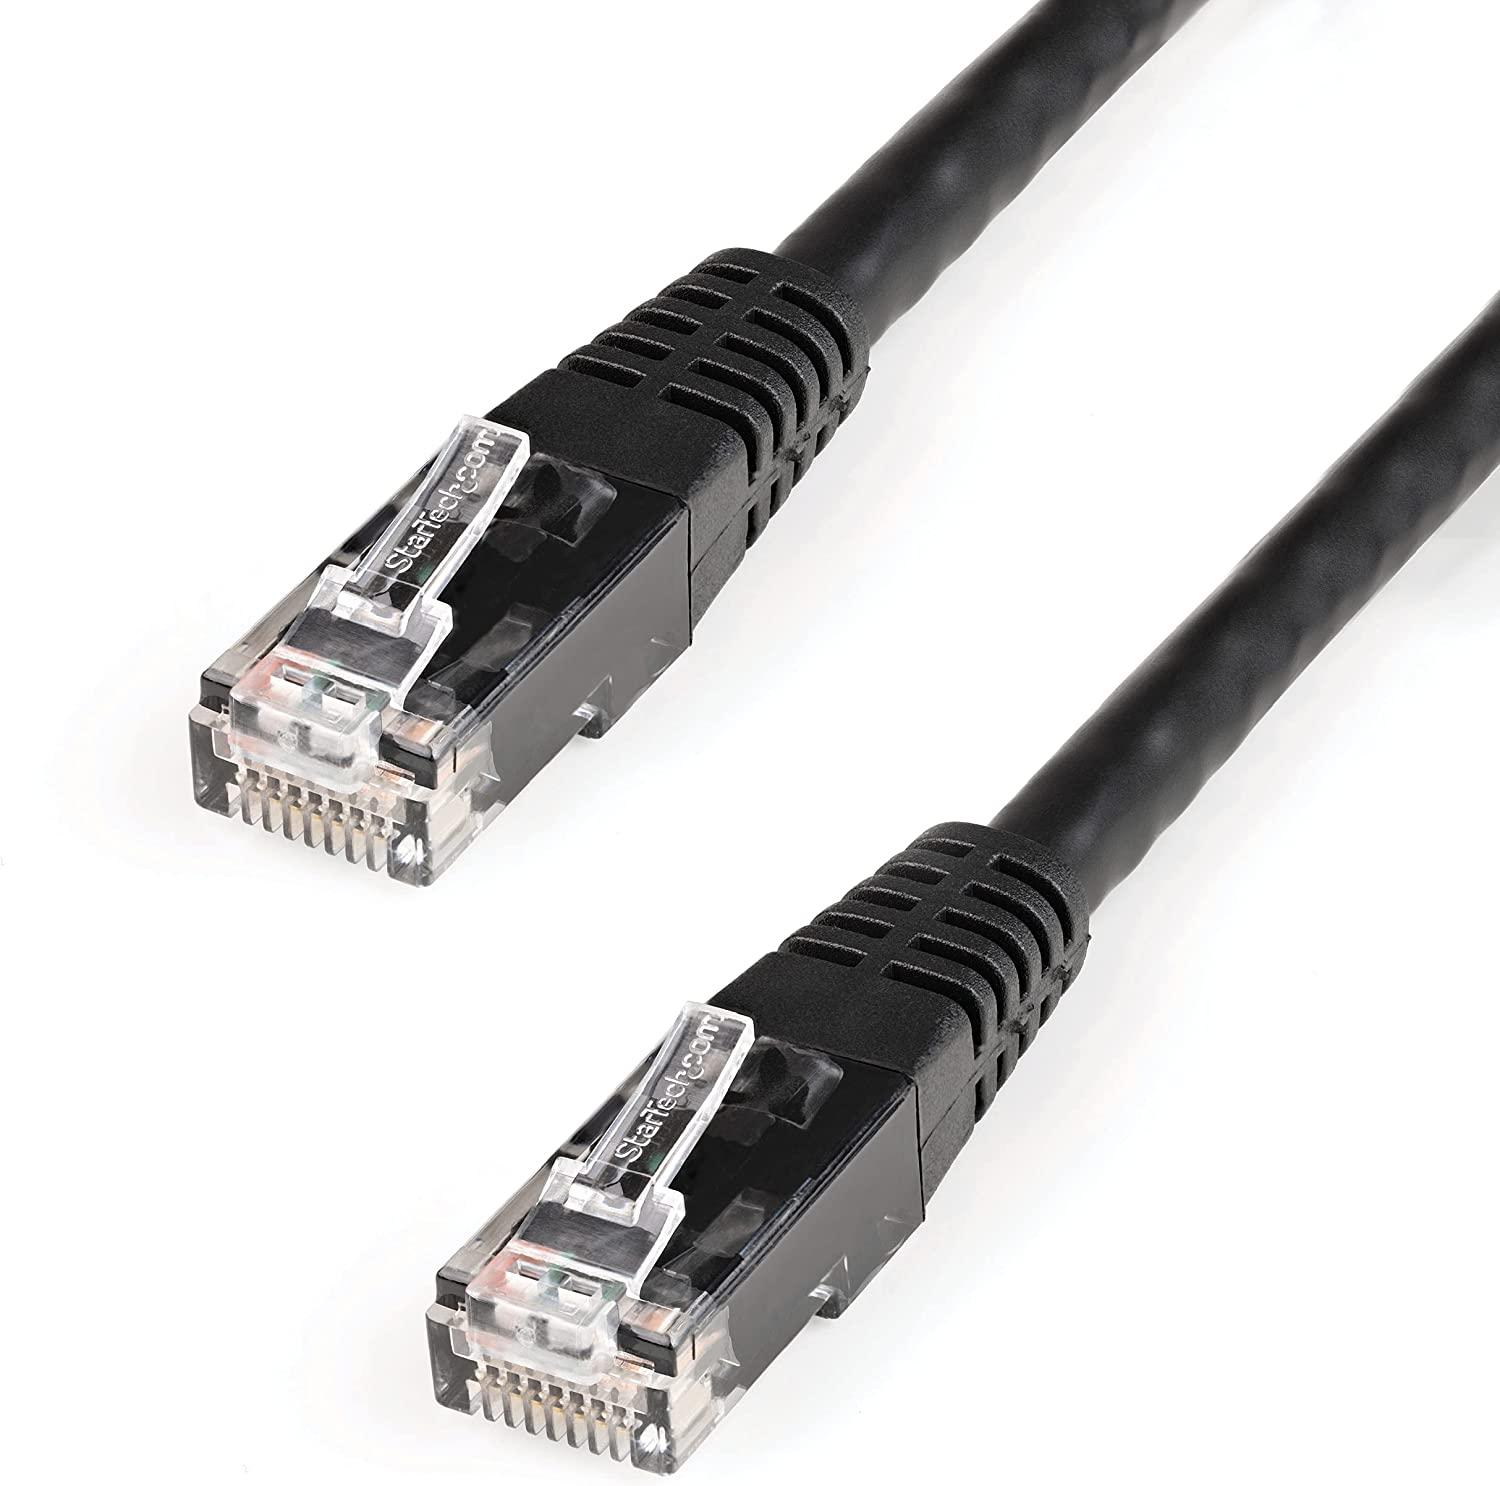 10x 50ft Amazon Basics RJ45 Cat-6 Gigabit Ethernet Cables for $31.39 Shipped